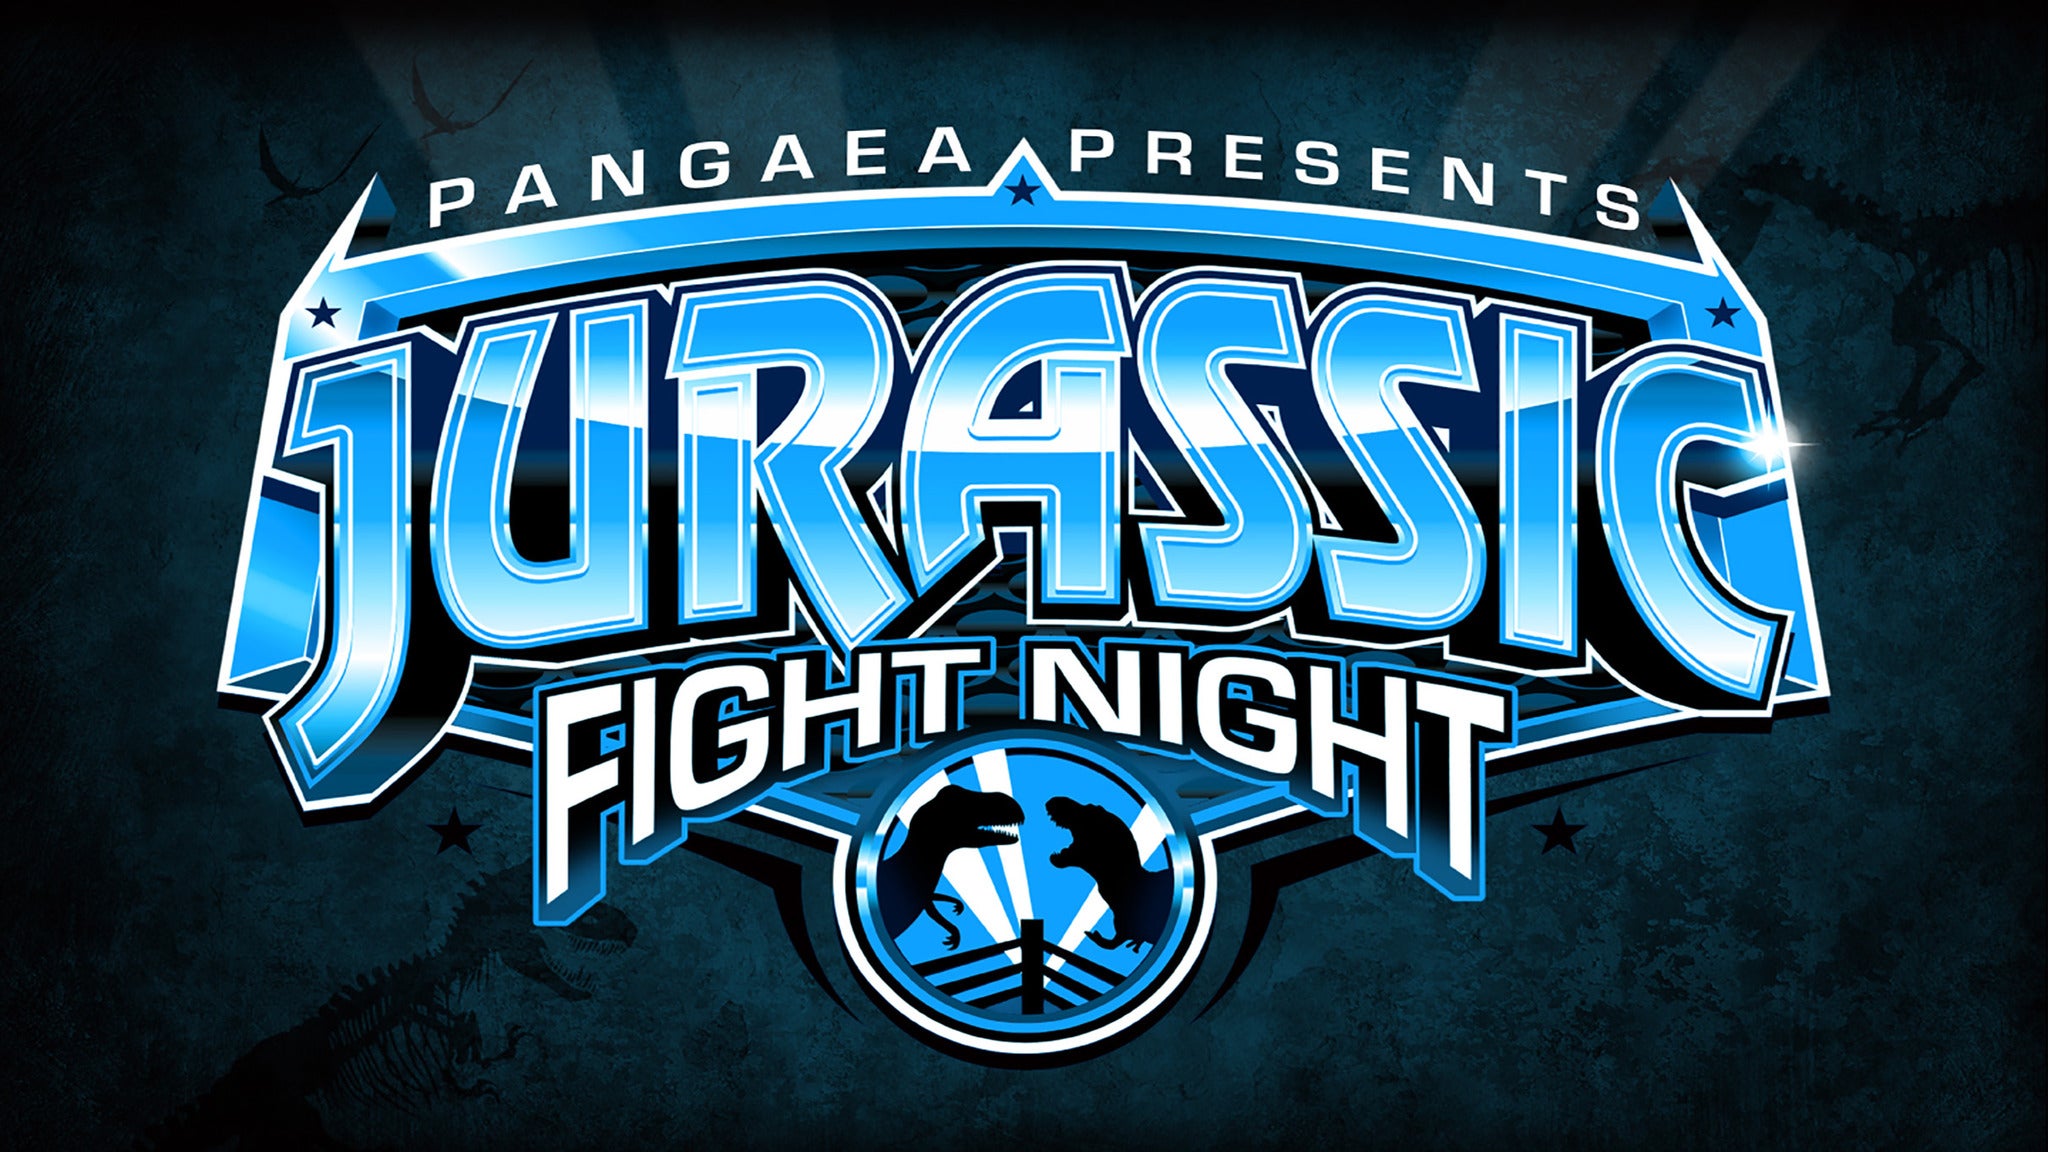 Jurassic Fight Night in Glendale promo photo for Ticketmaster  presale offer code